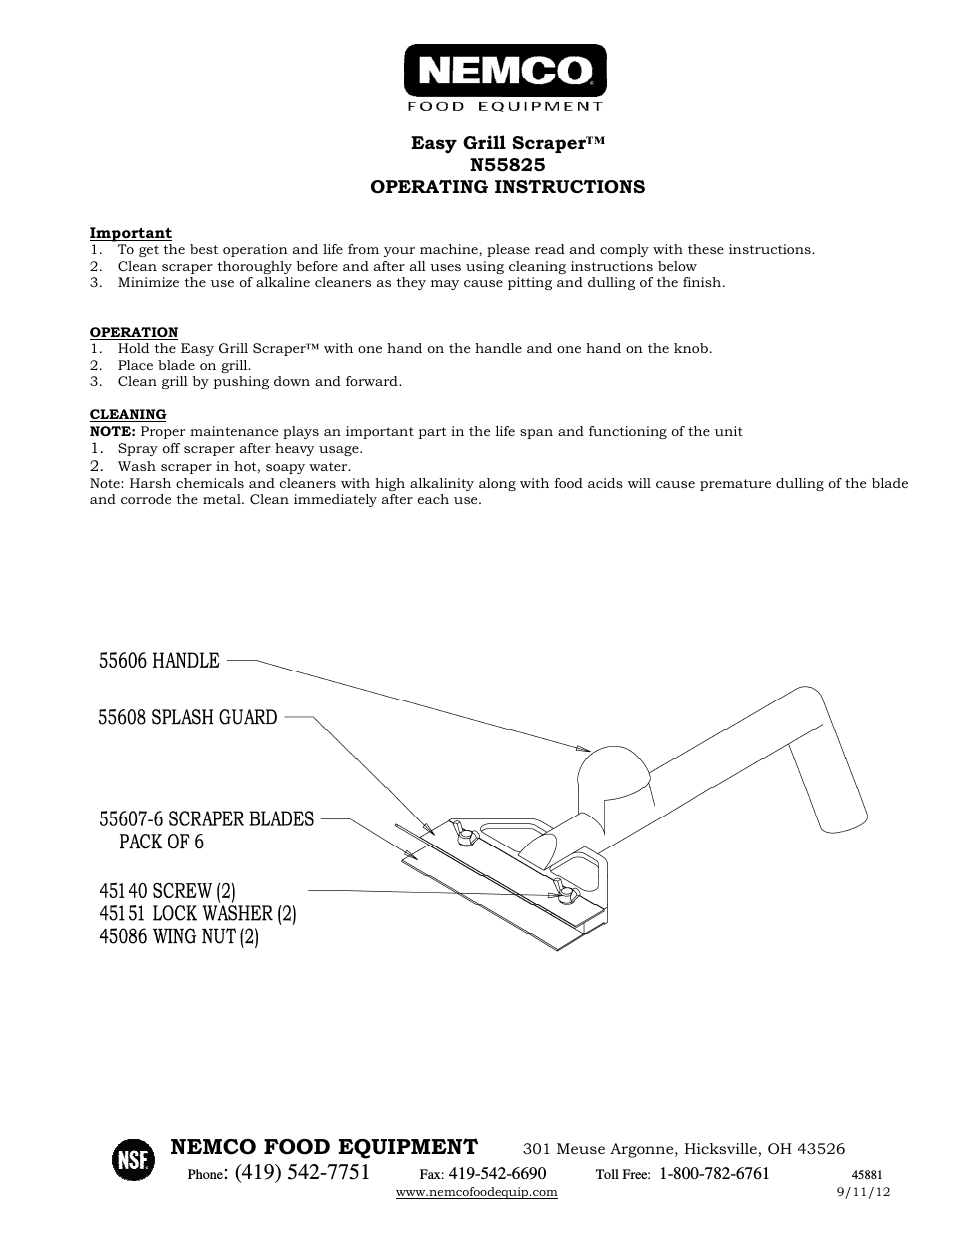 Easy Grill Scraper - Operations Manual